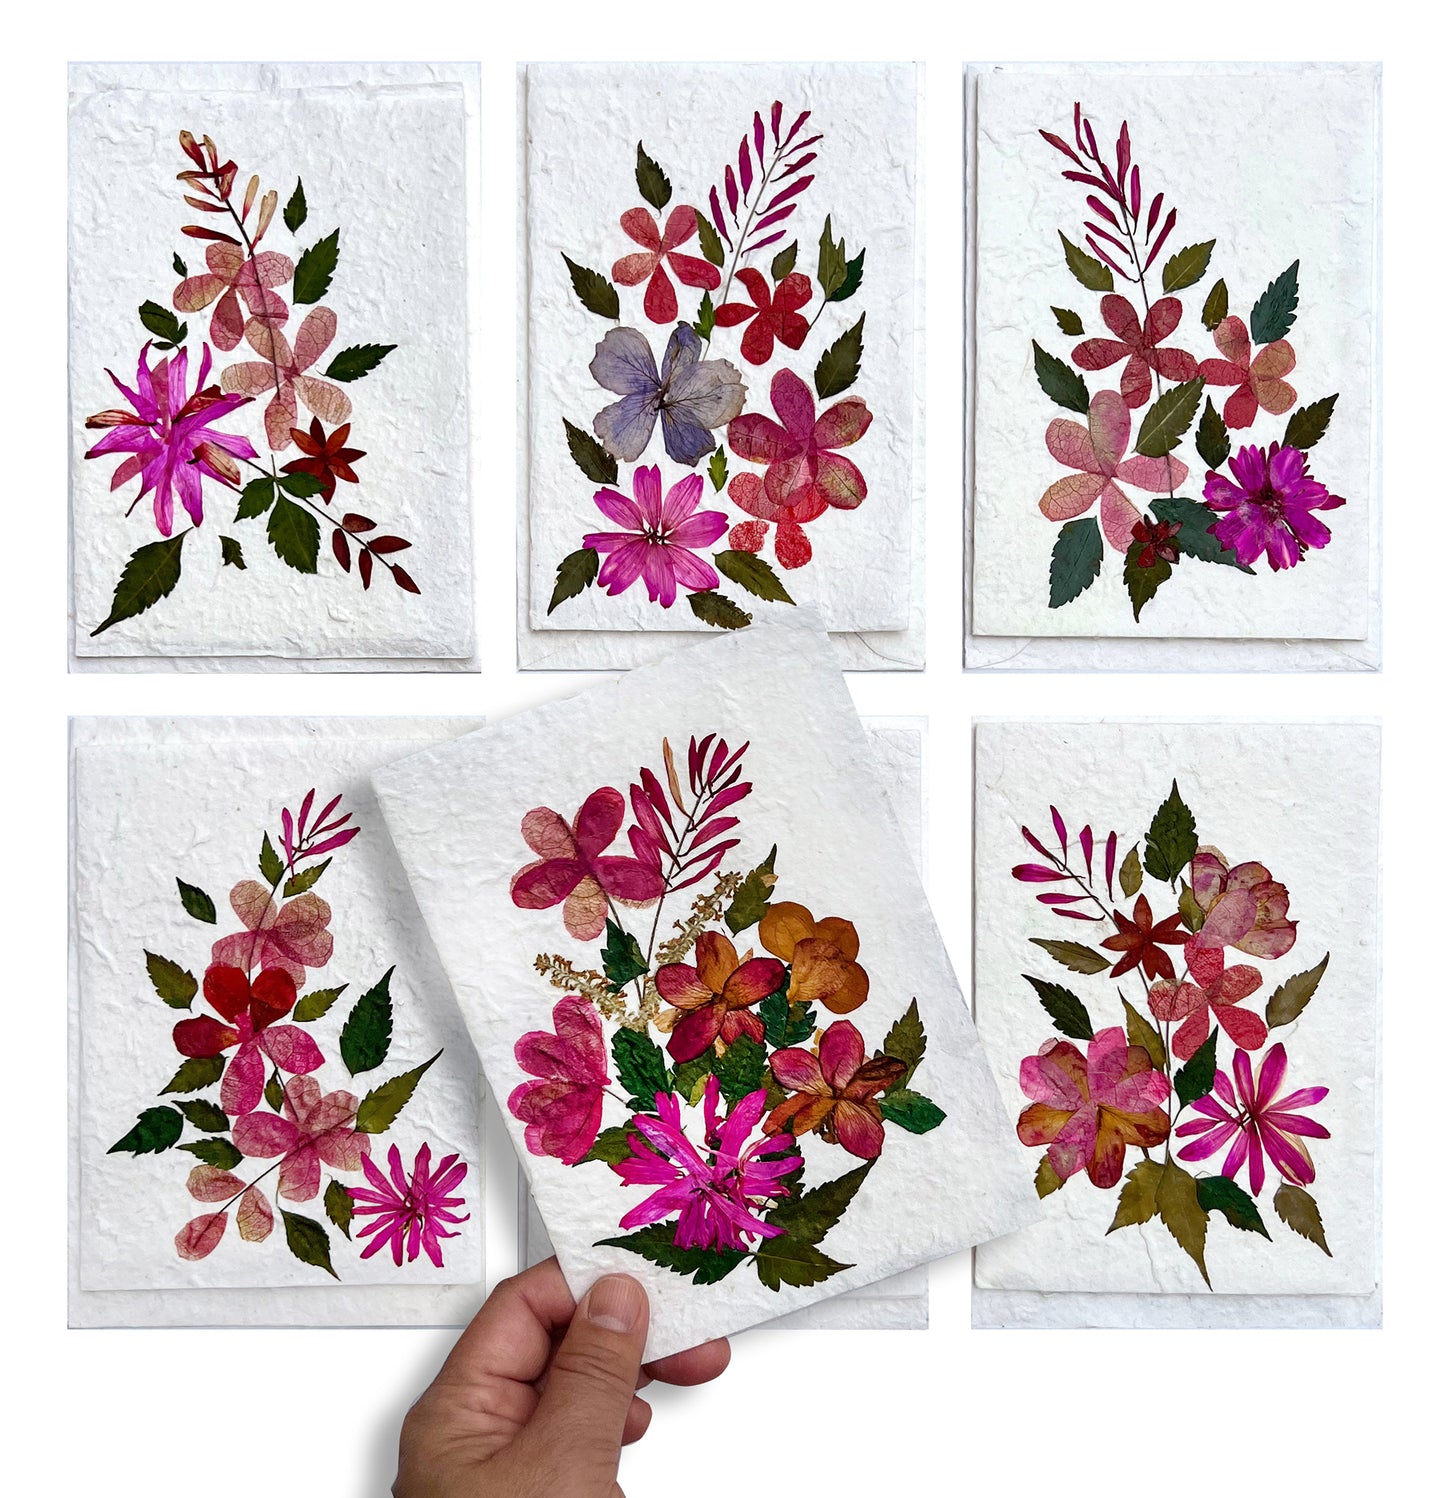 Handmade Mulberry Paper Greeting Card  5x7 Inch Random Pack (3 Pretty Sweet)